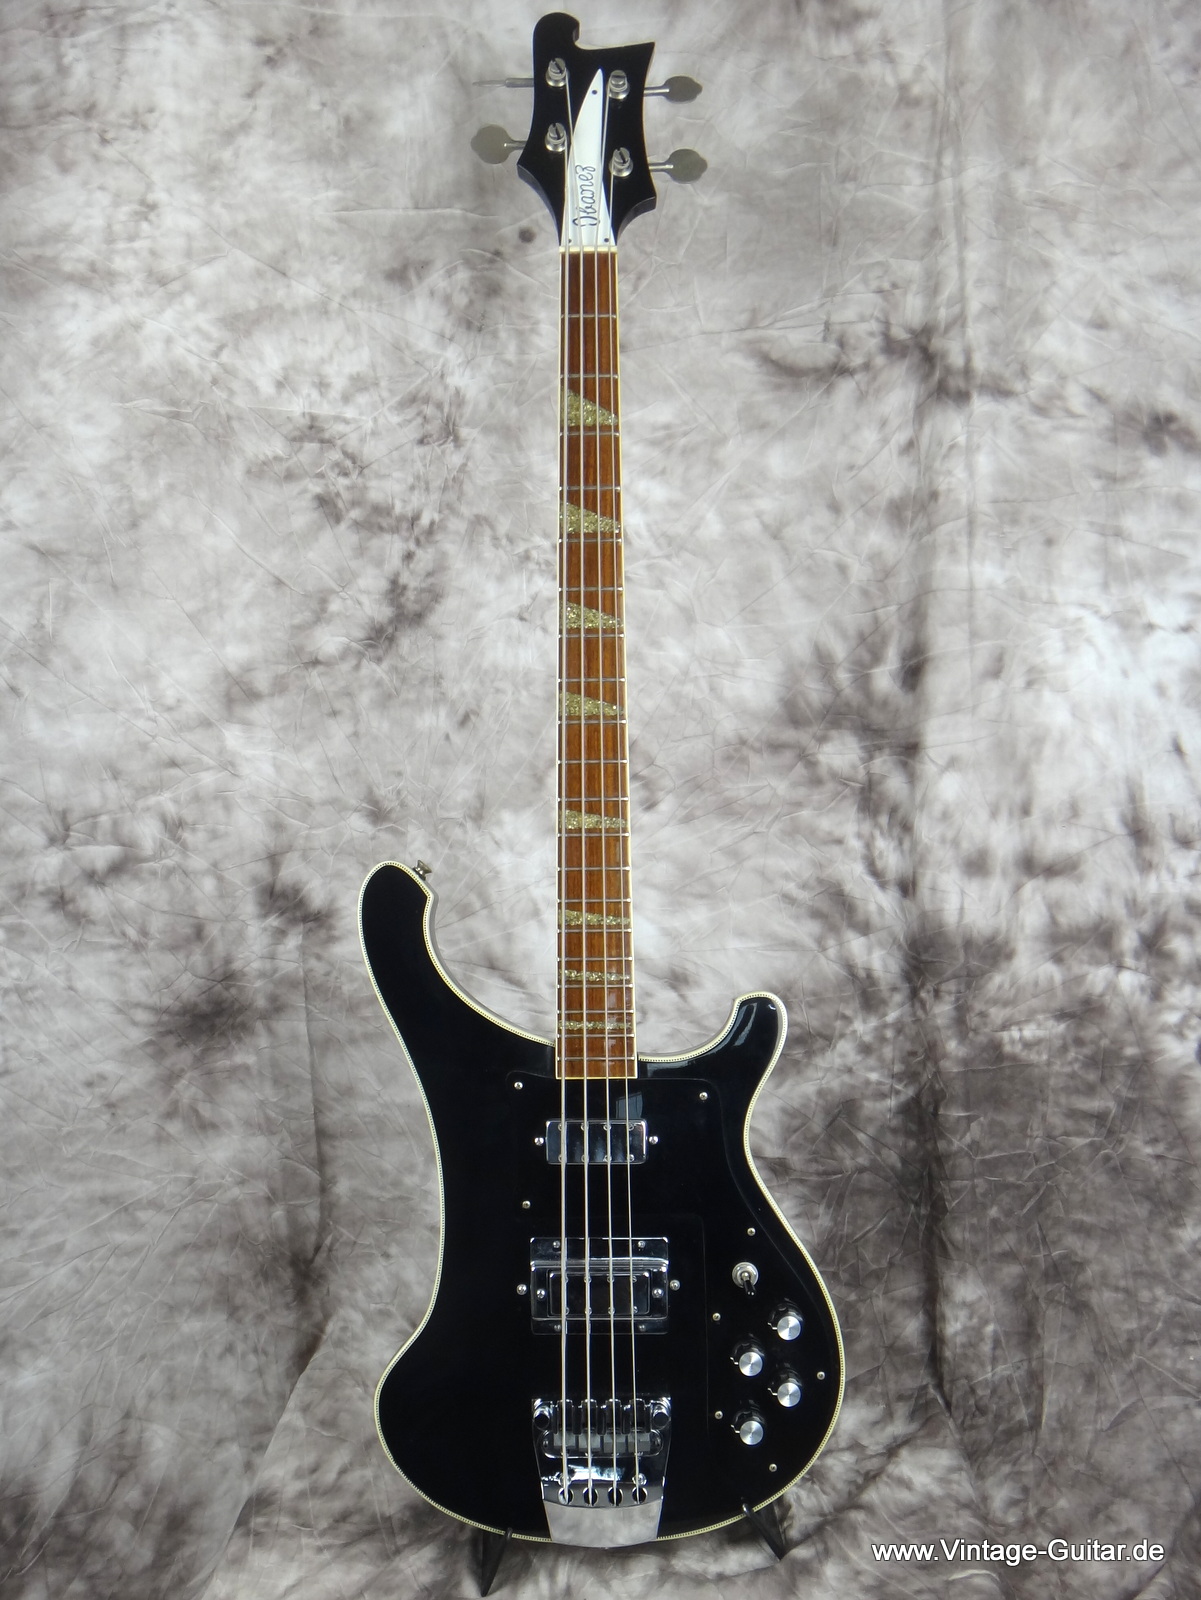 Ibanez Model 2338 Rickenbacker 4001 Copy 1970's Black Bass For